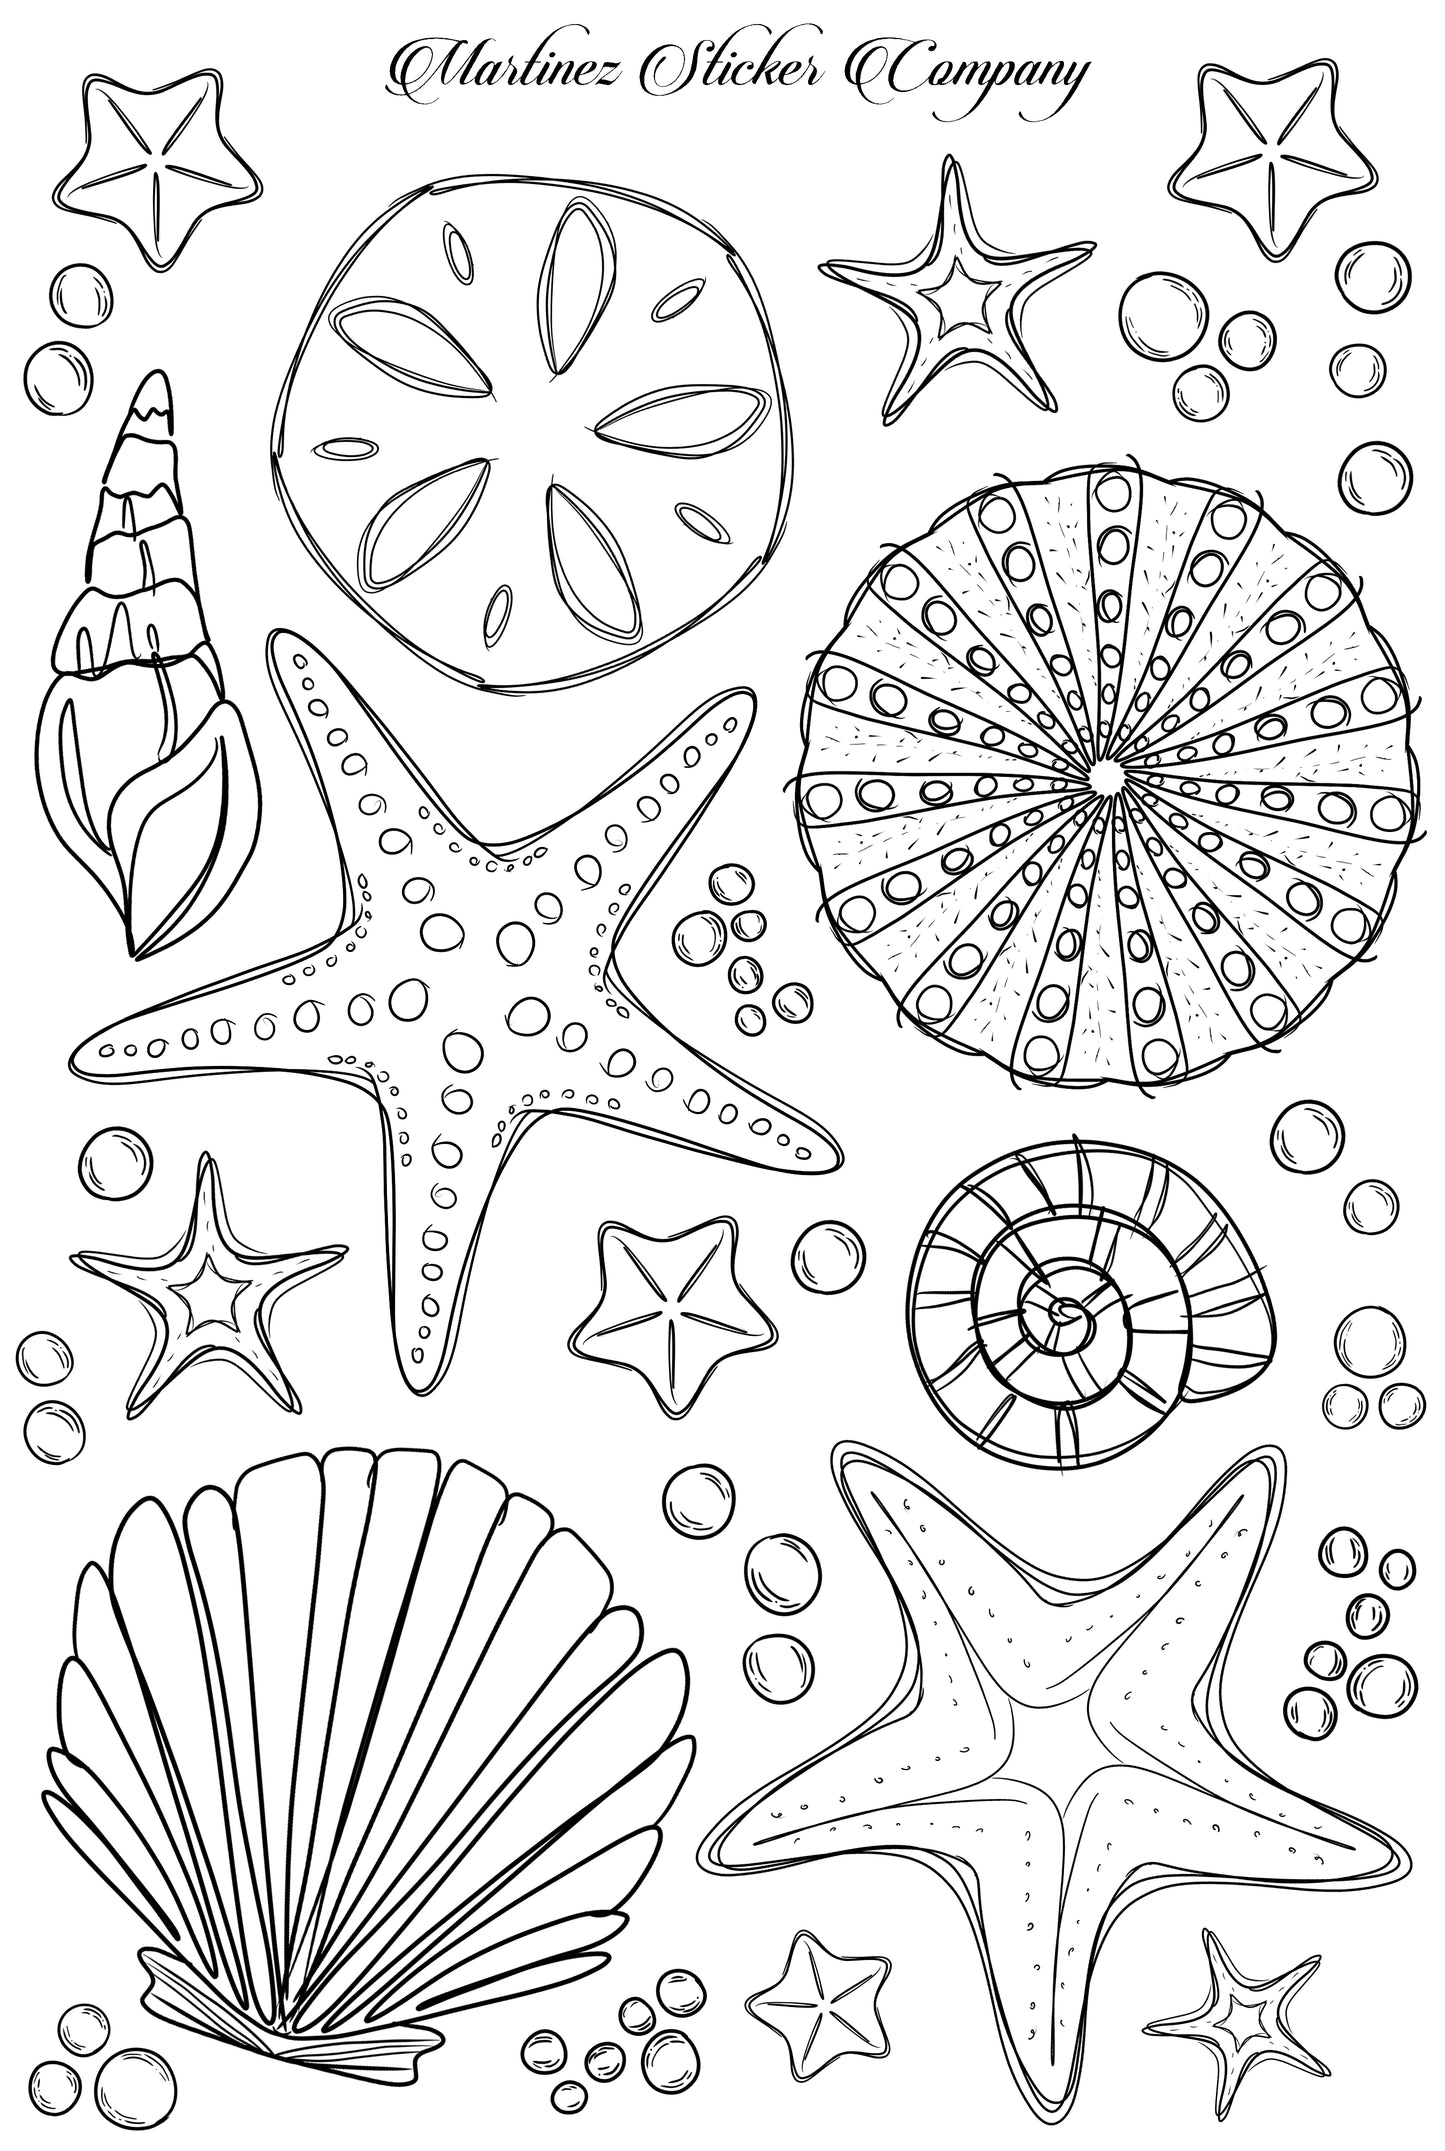 Seashells and Starfish BW